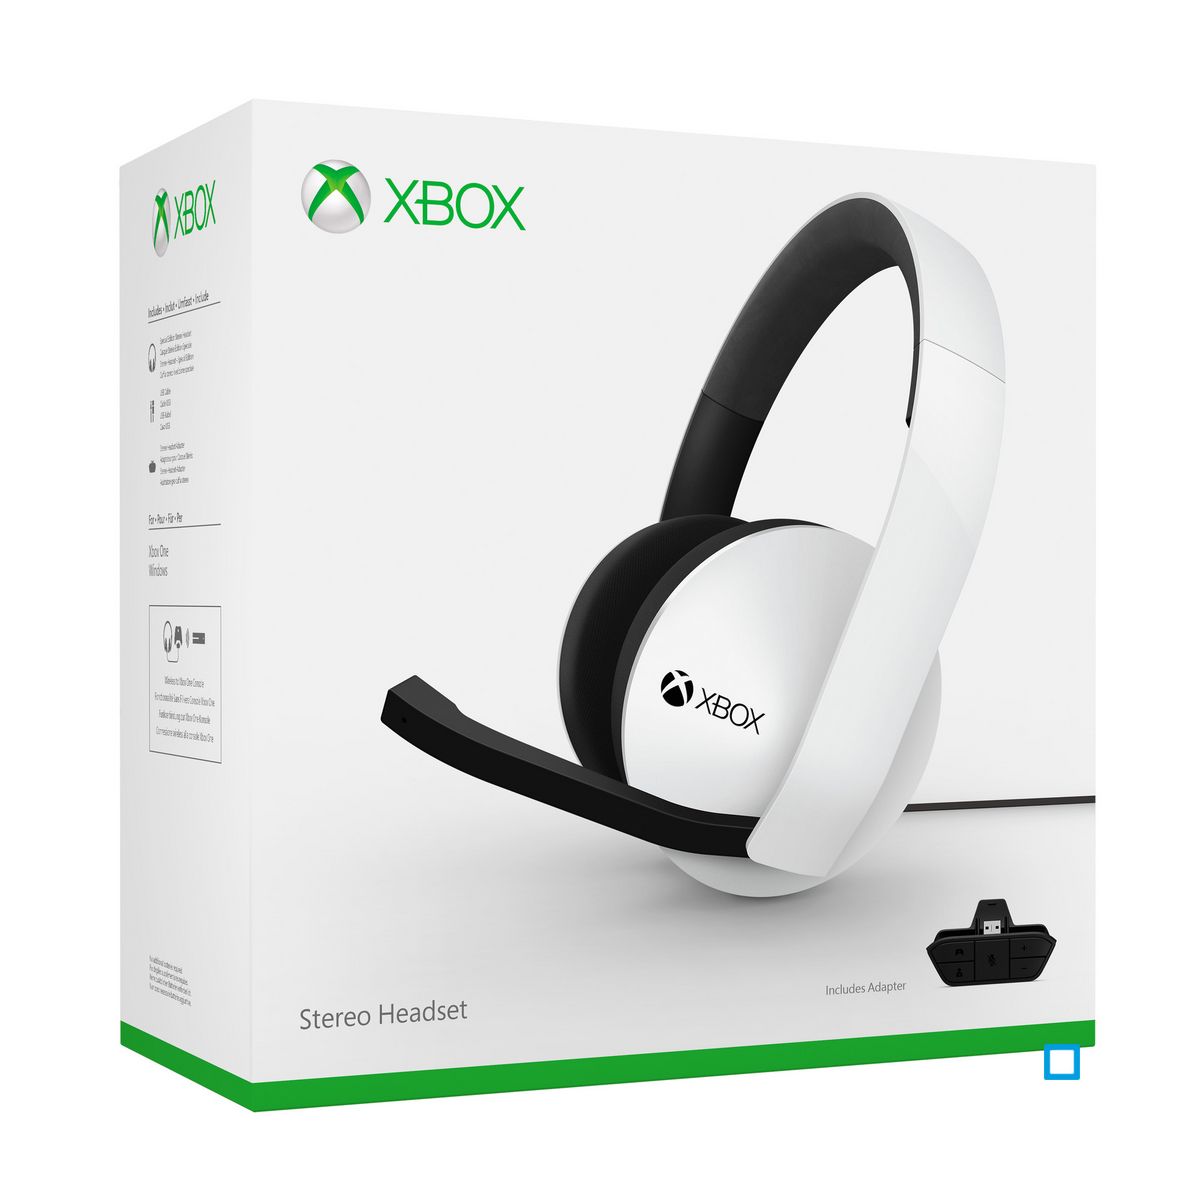 Купить наушники xbox с микрофоном. Xbox stereo Headset. Microsoft Xbox stereo Headset?. Наушники Xbox stereo Headset 8li-00002. Беспроводная гарнитура Microsoft Xbox.